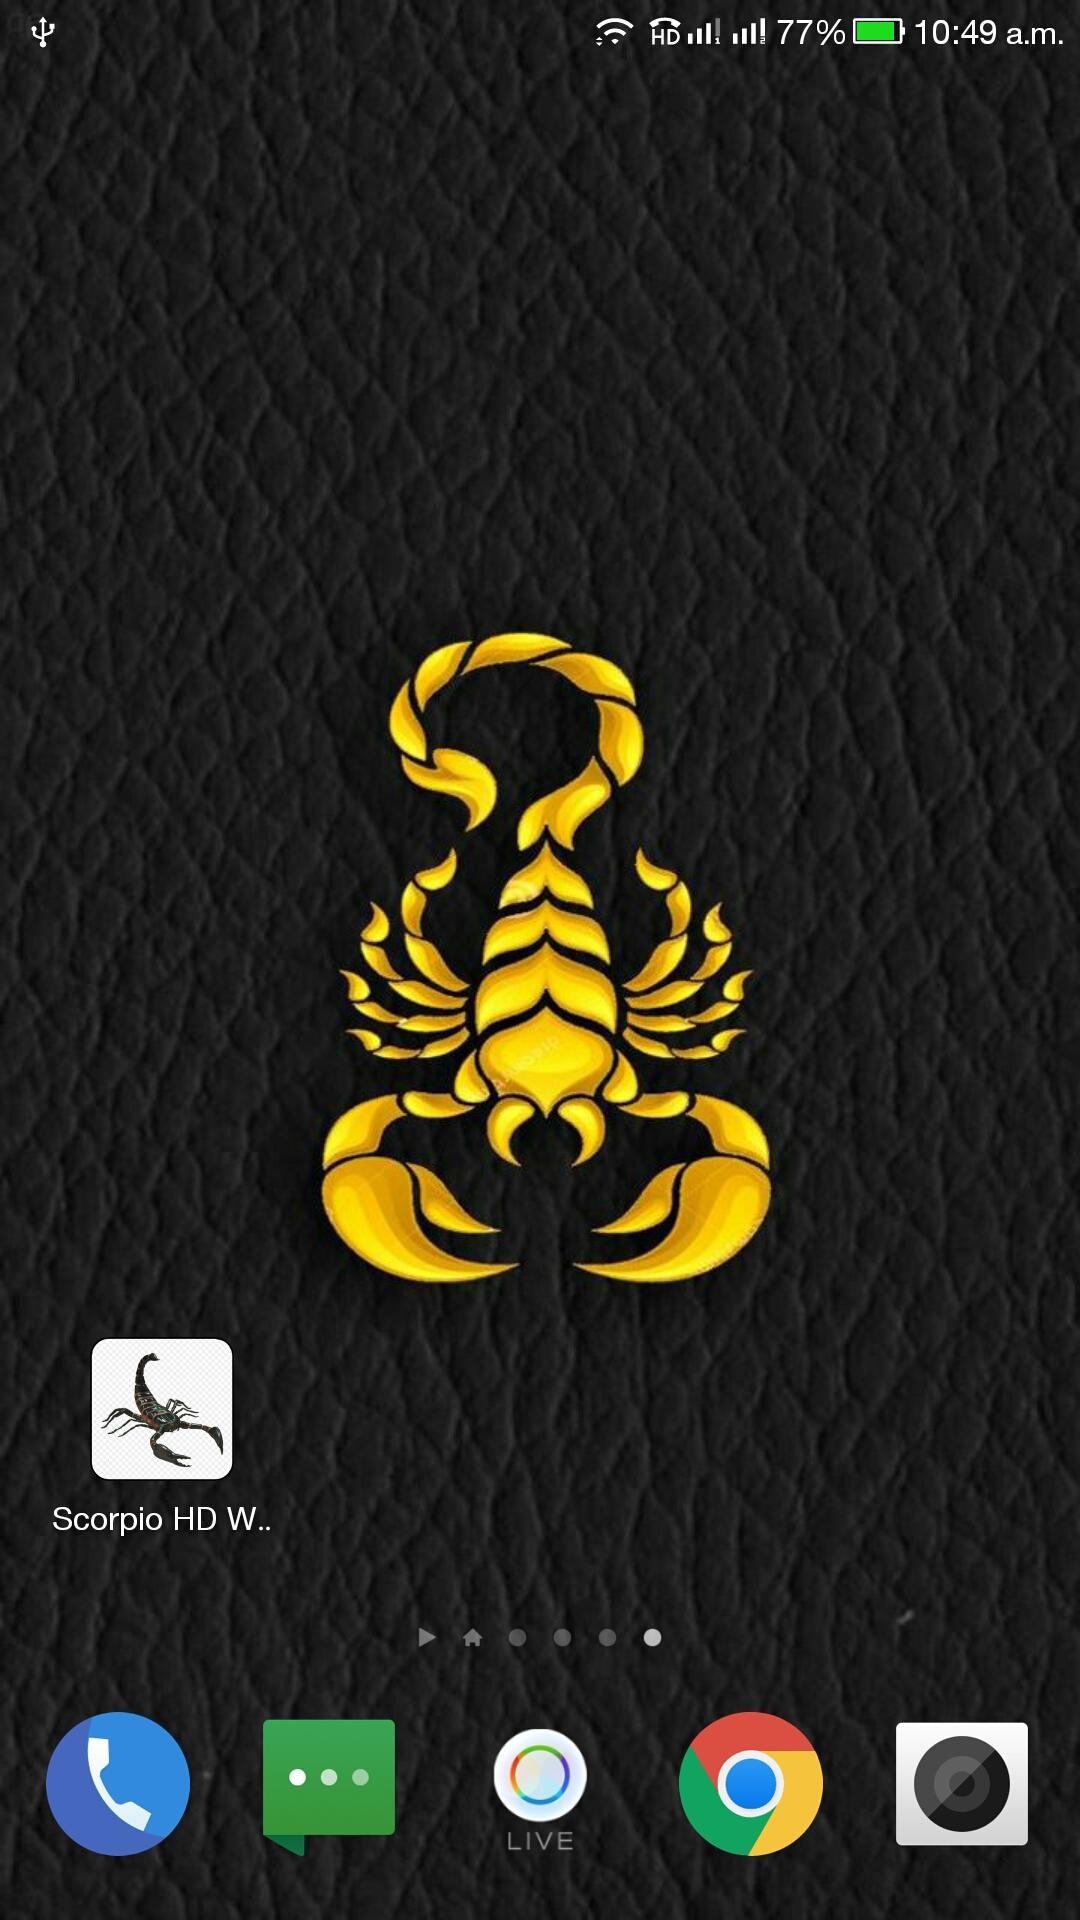 Scorpion Hd Wallpapers